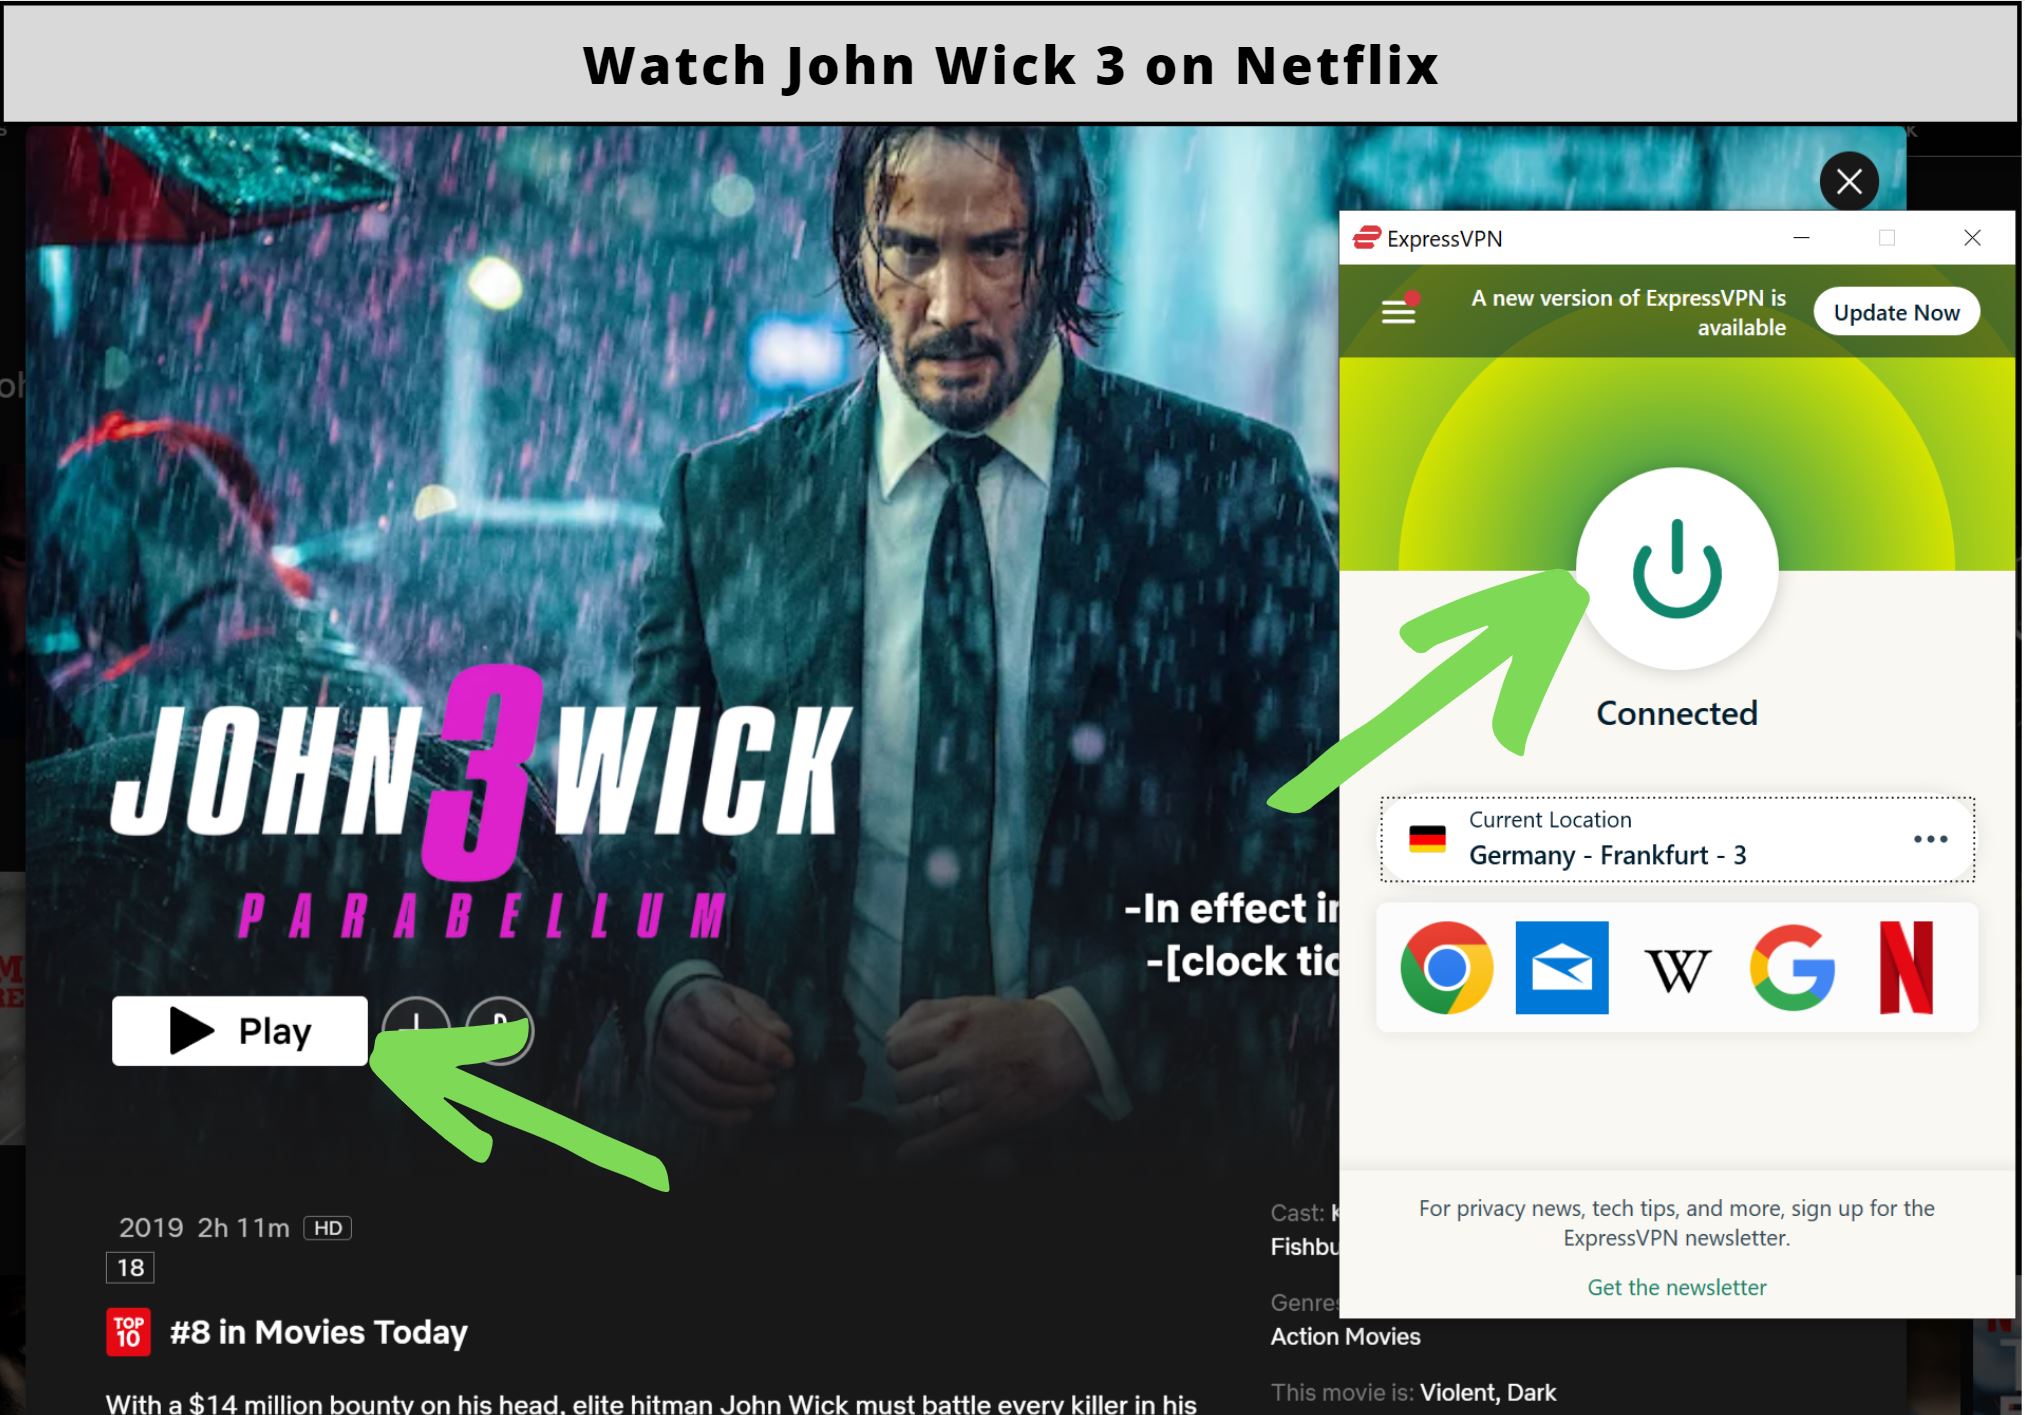 Is John Wick 3 on Netflix? - Quora